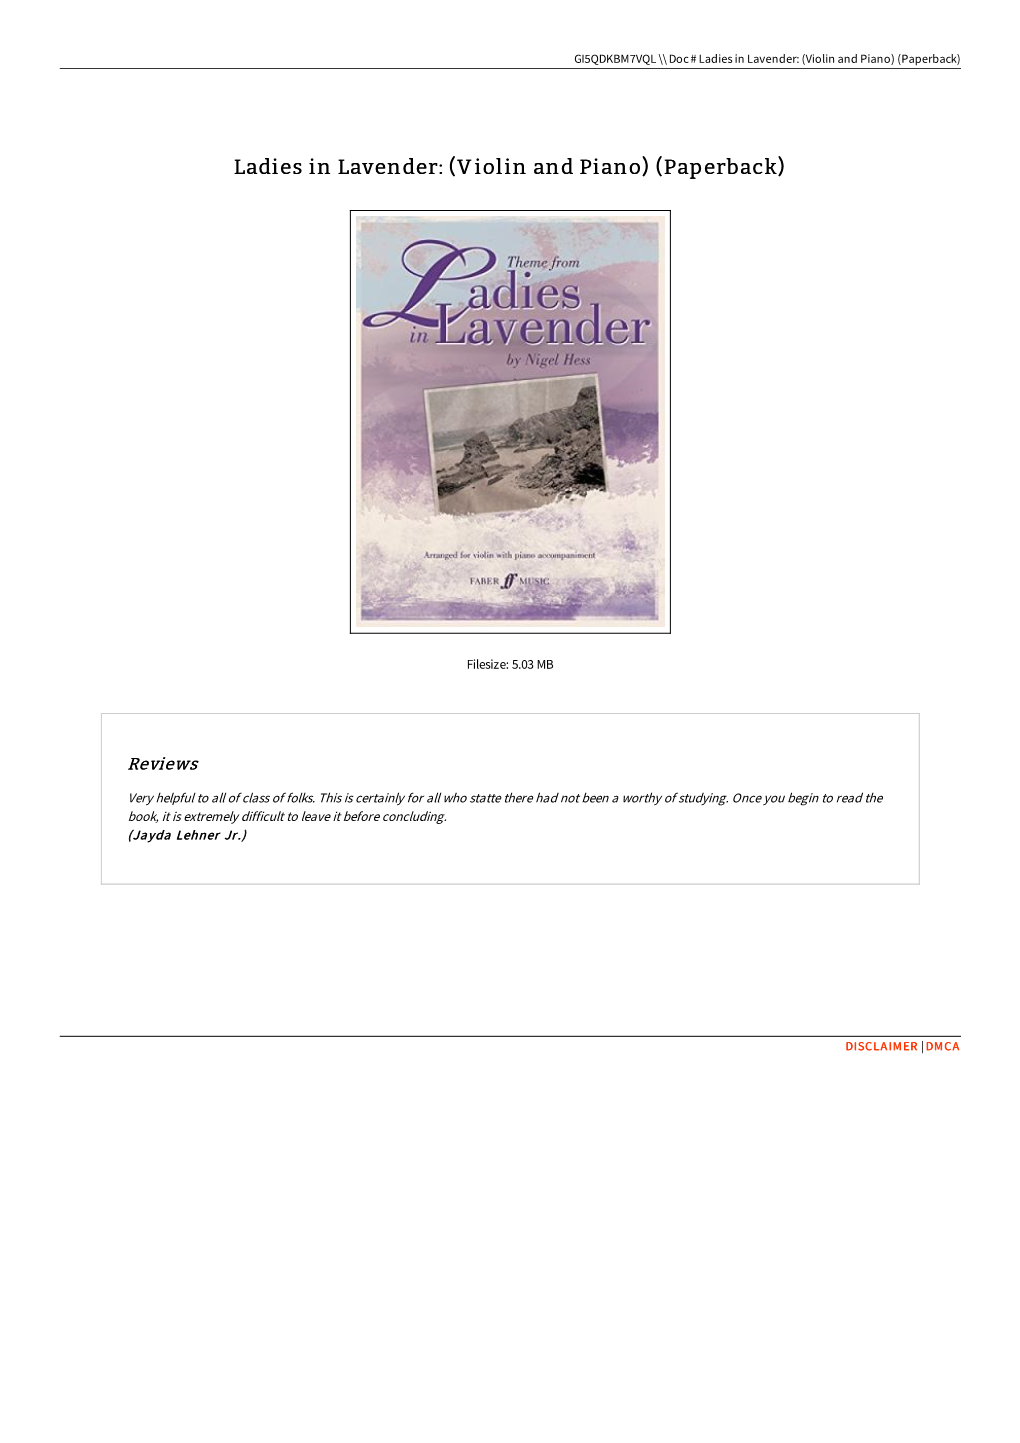 Download PDF // Ladies in Lavender: (Violin and Piano) (Paperback